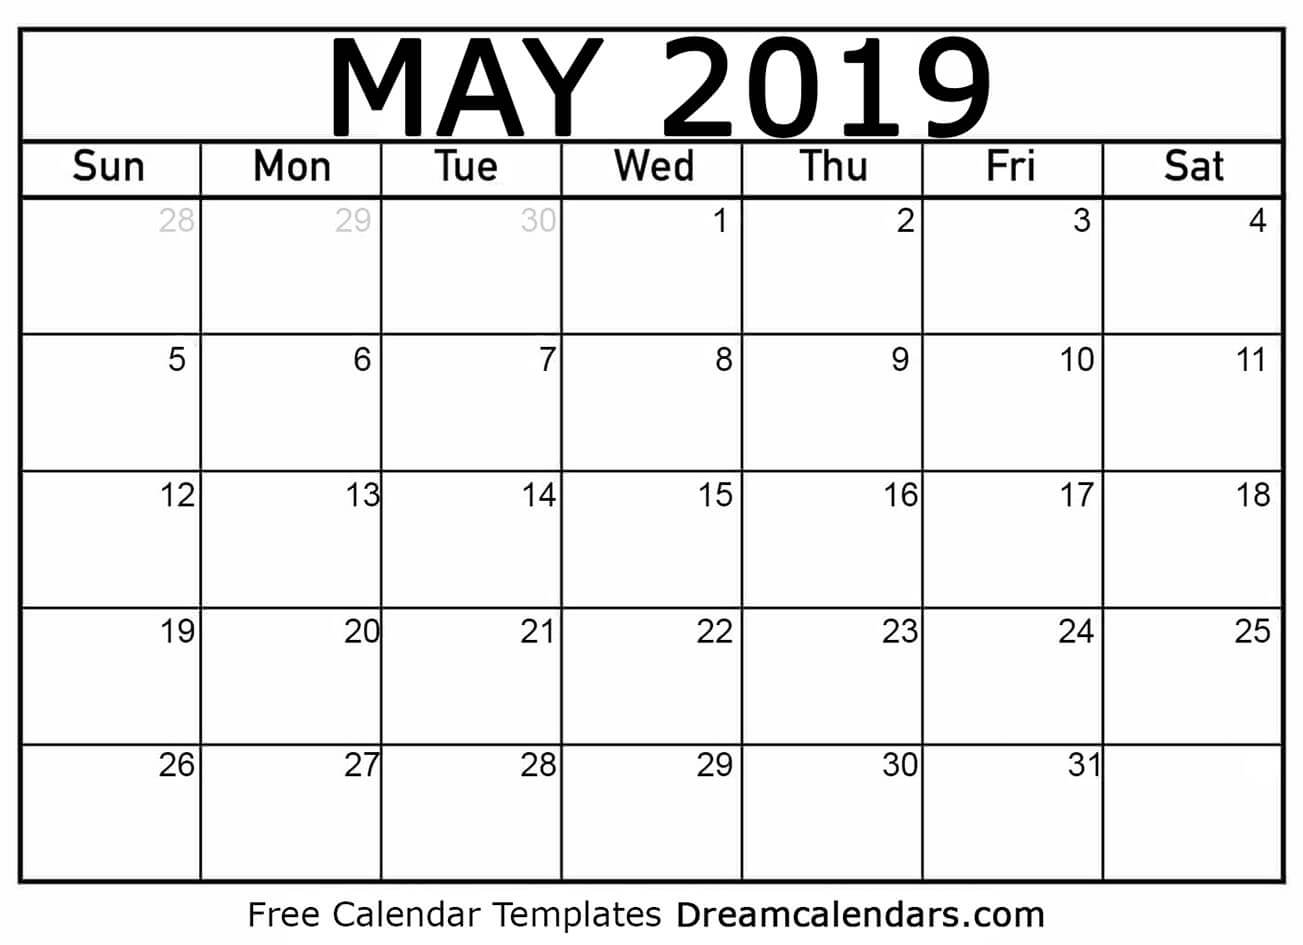 Free May 2019 Printable Calendar | Dream Calendars